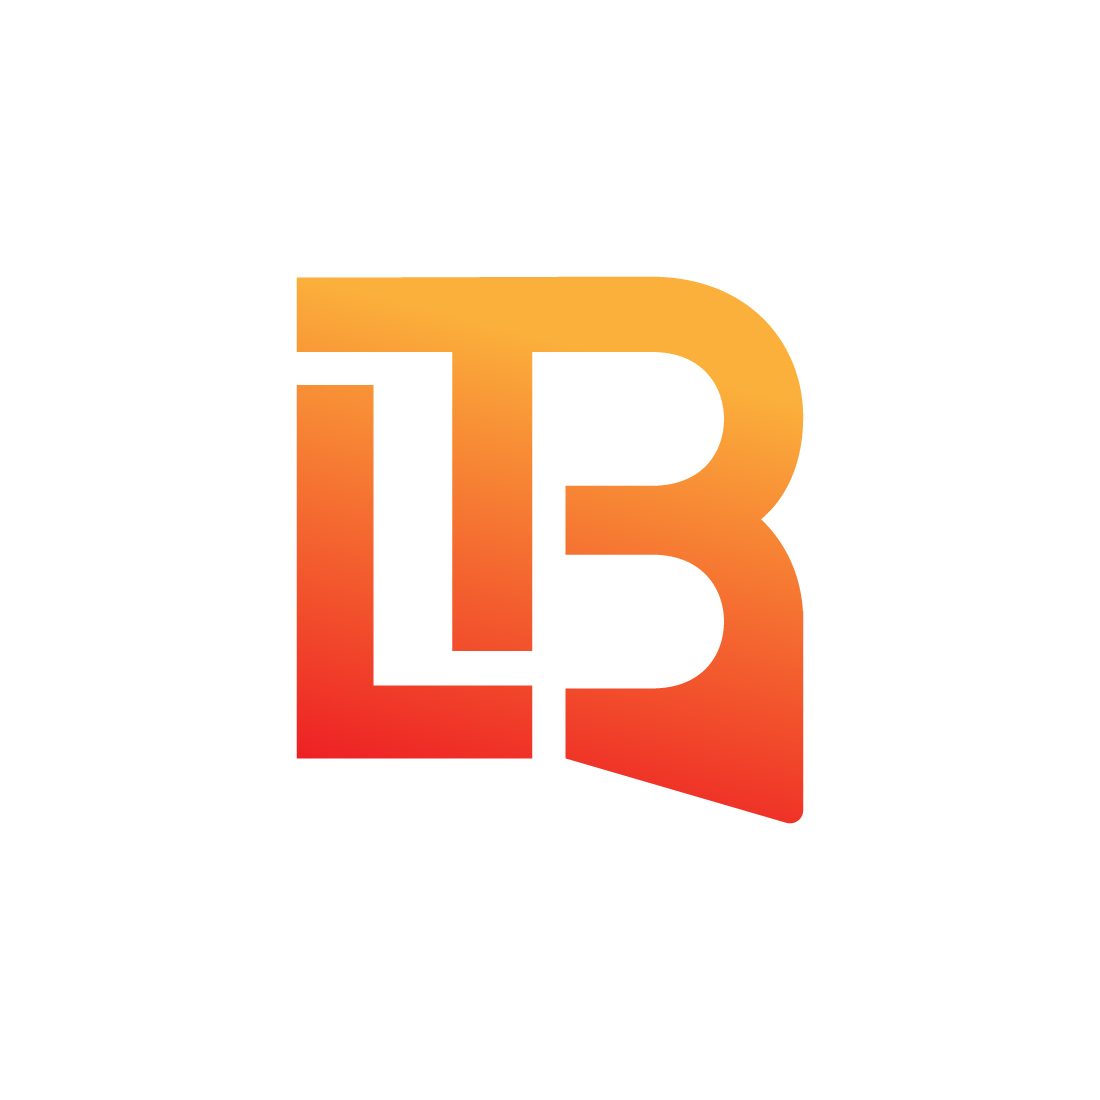 LTB App Logo preview image.